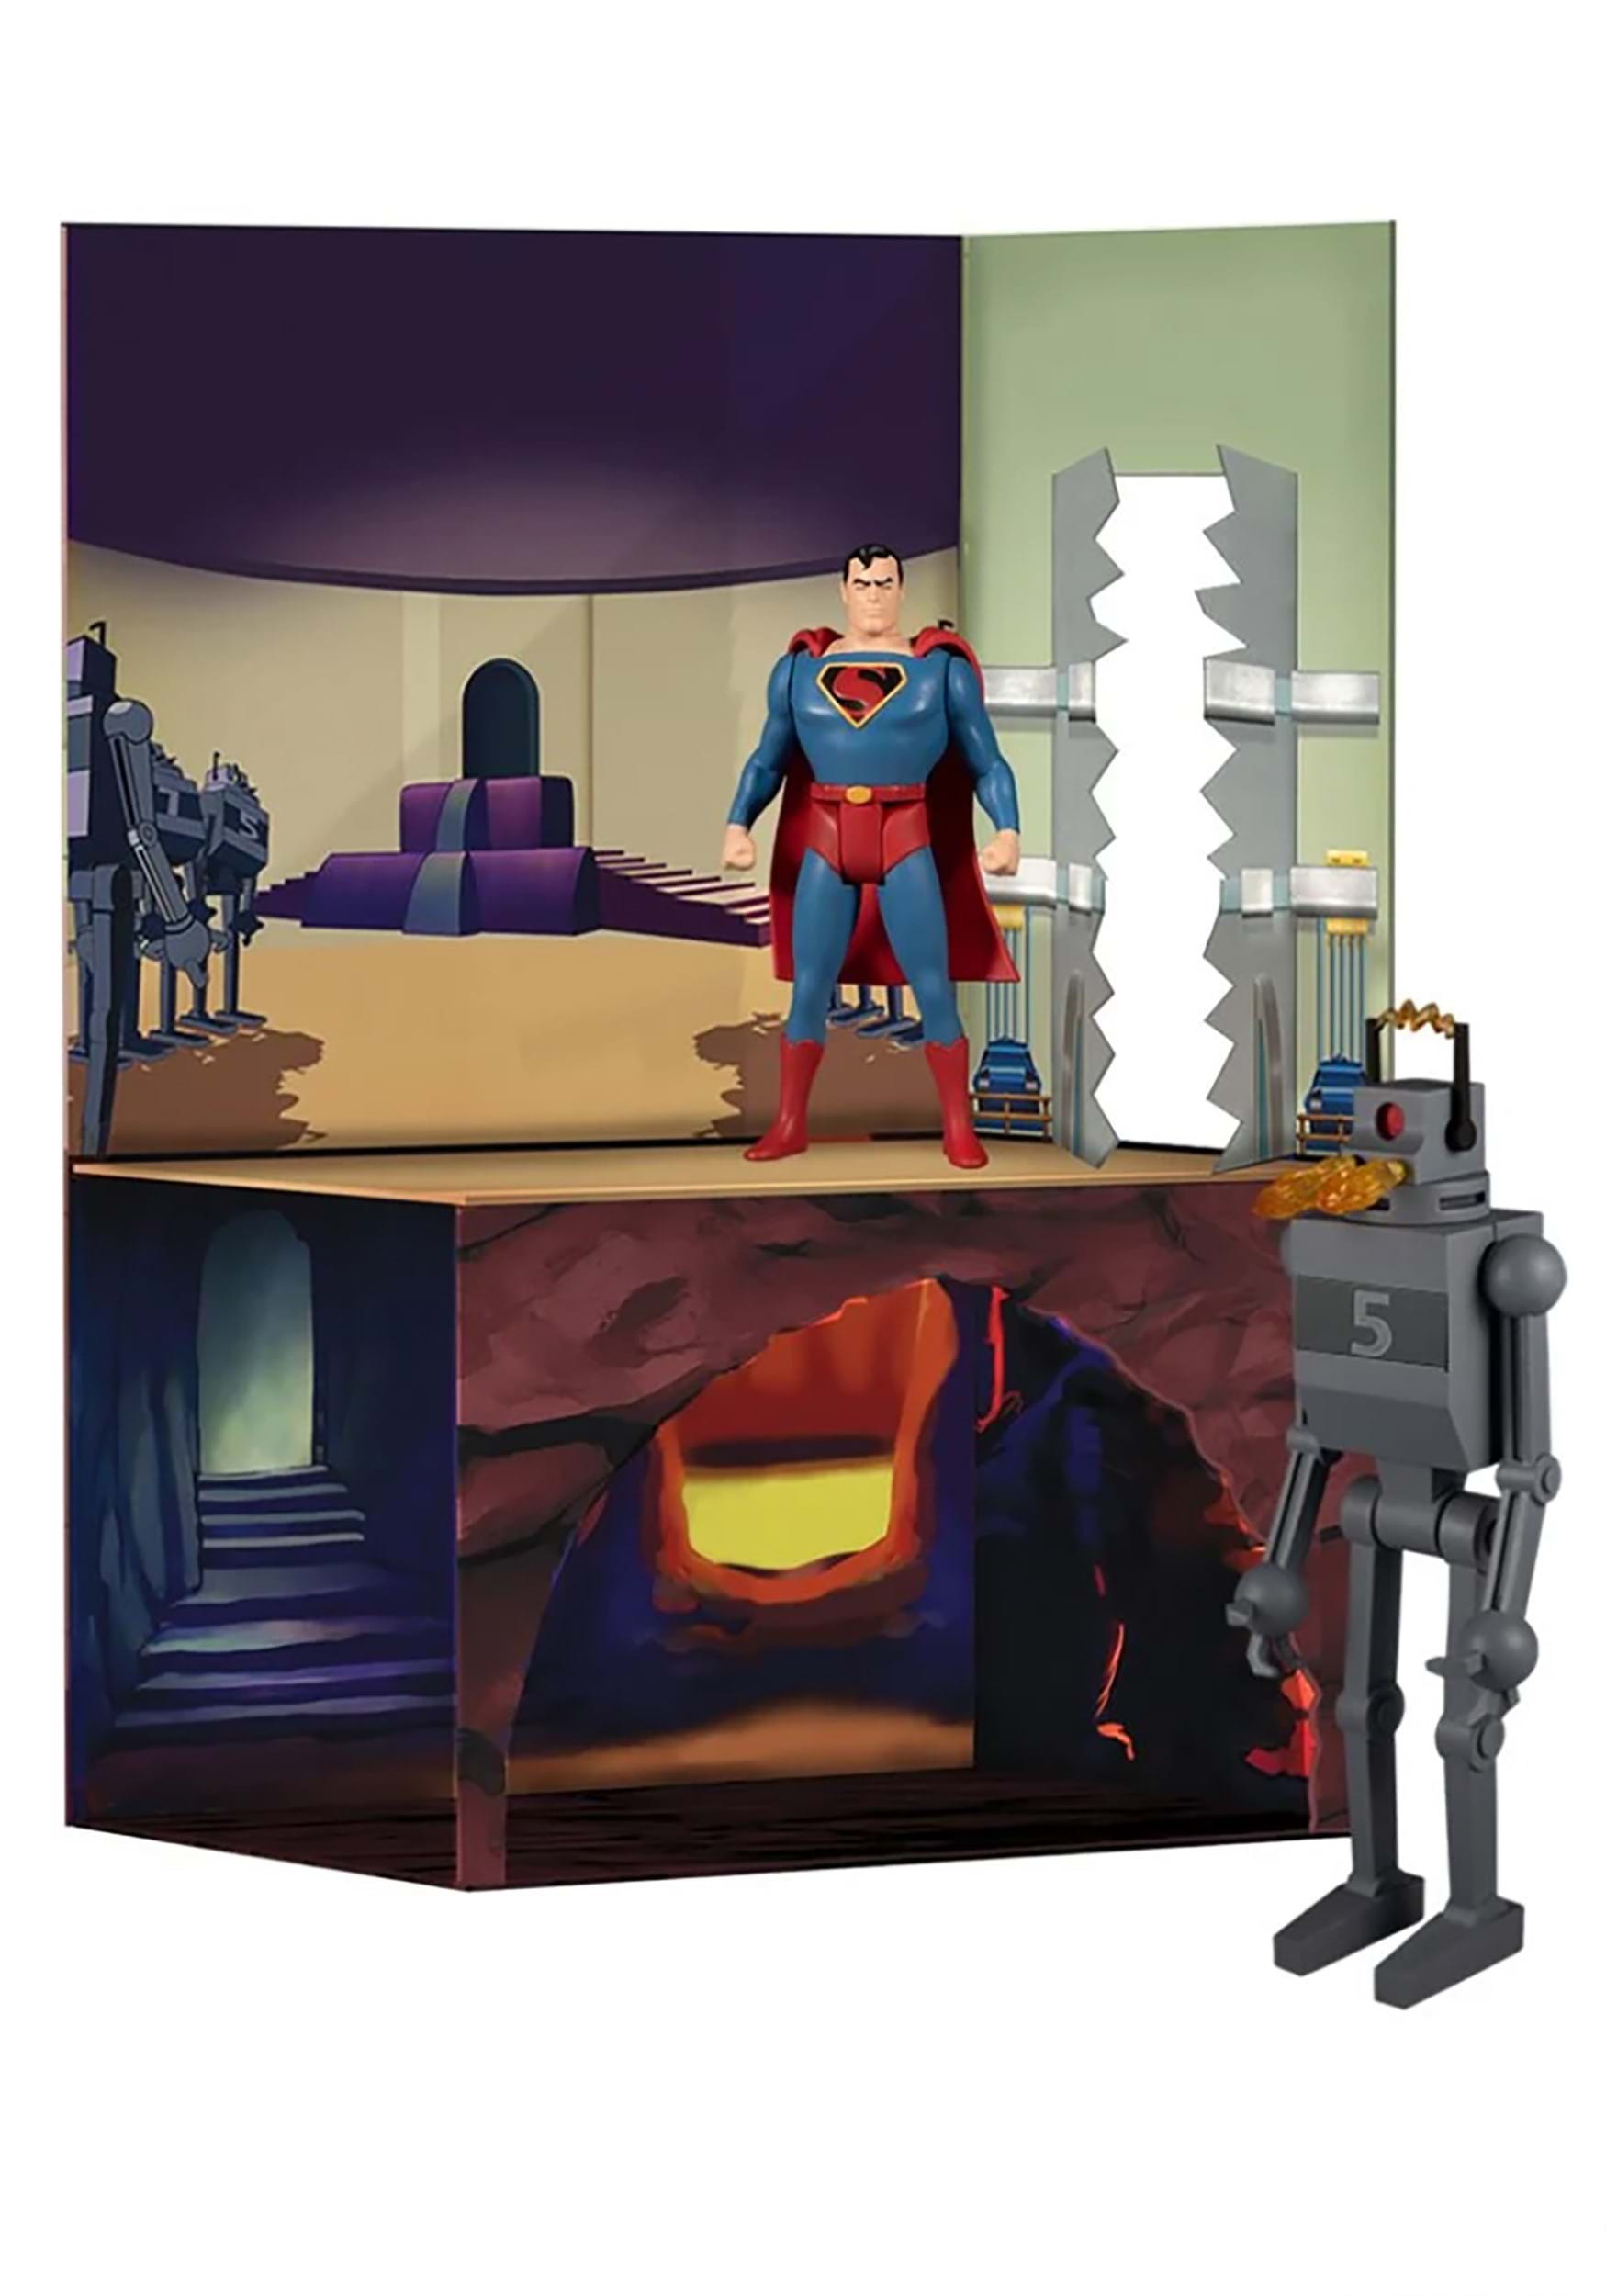 1941 Superman Cartoon Deluxe Box Set